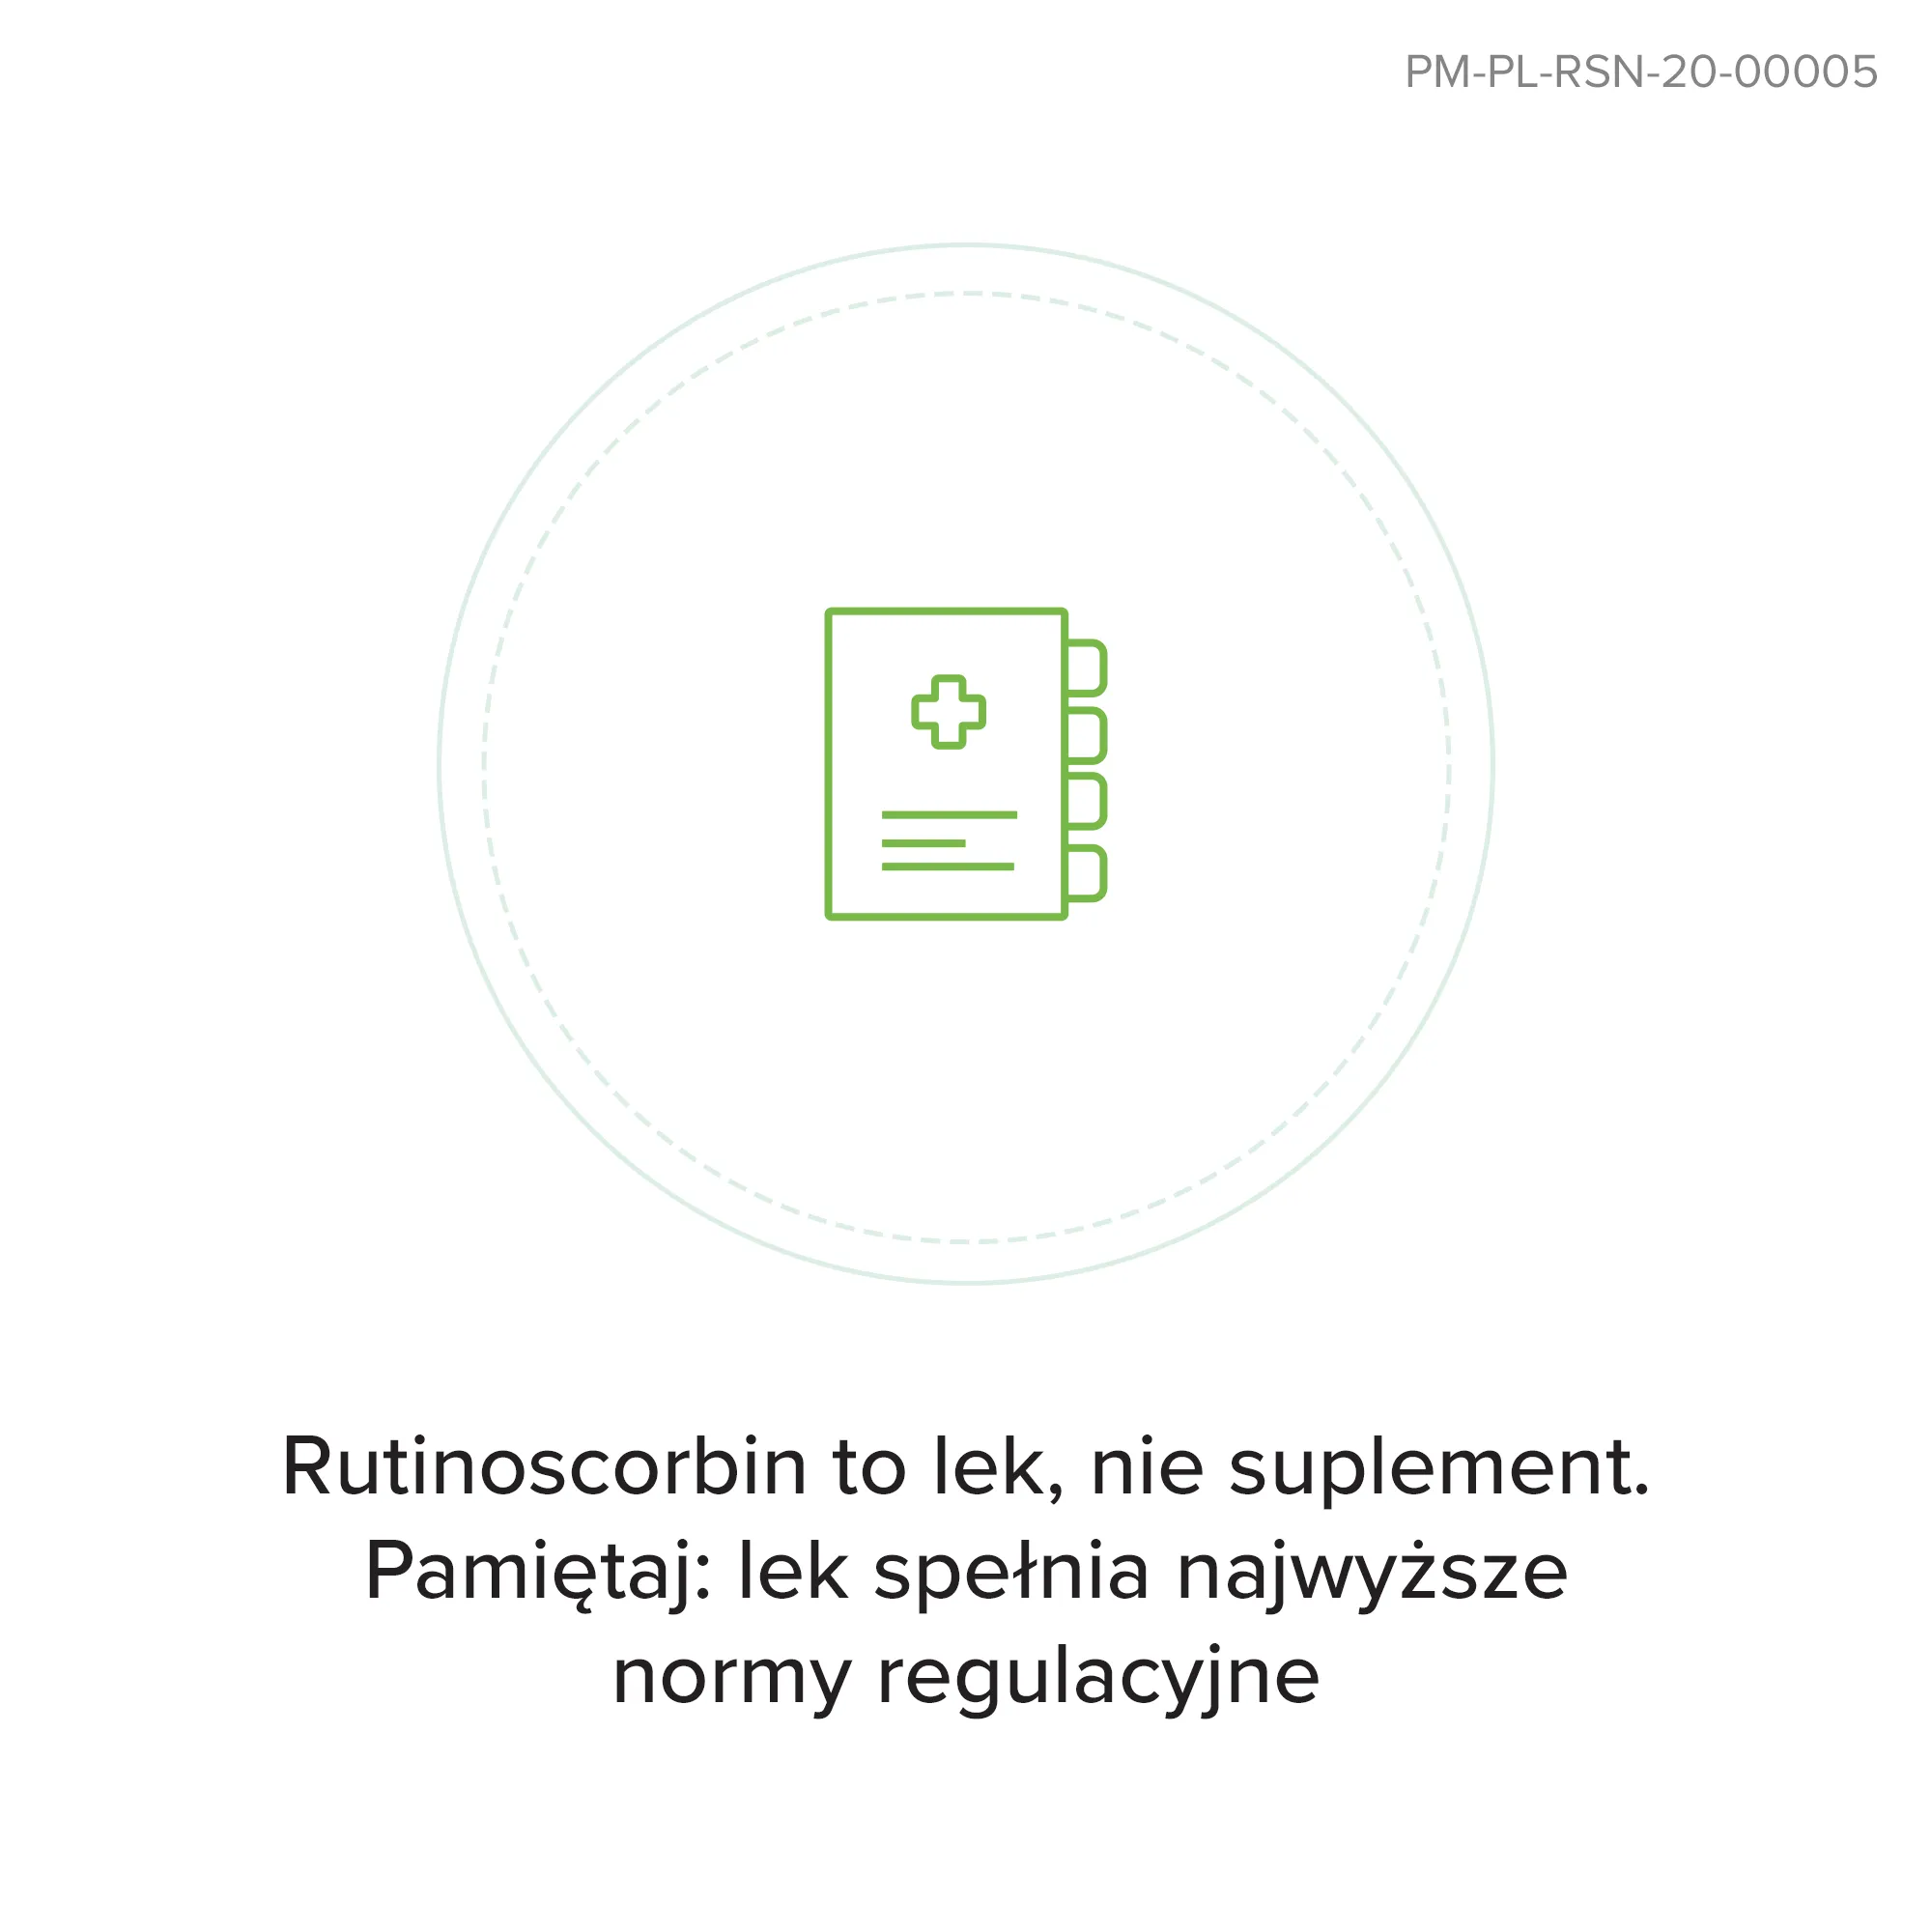 Rutinoscorbin, 150 tabletek 